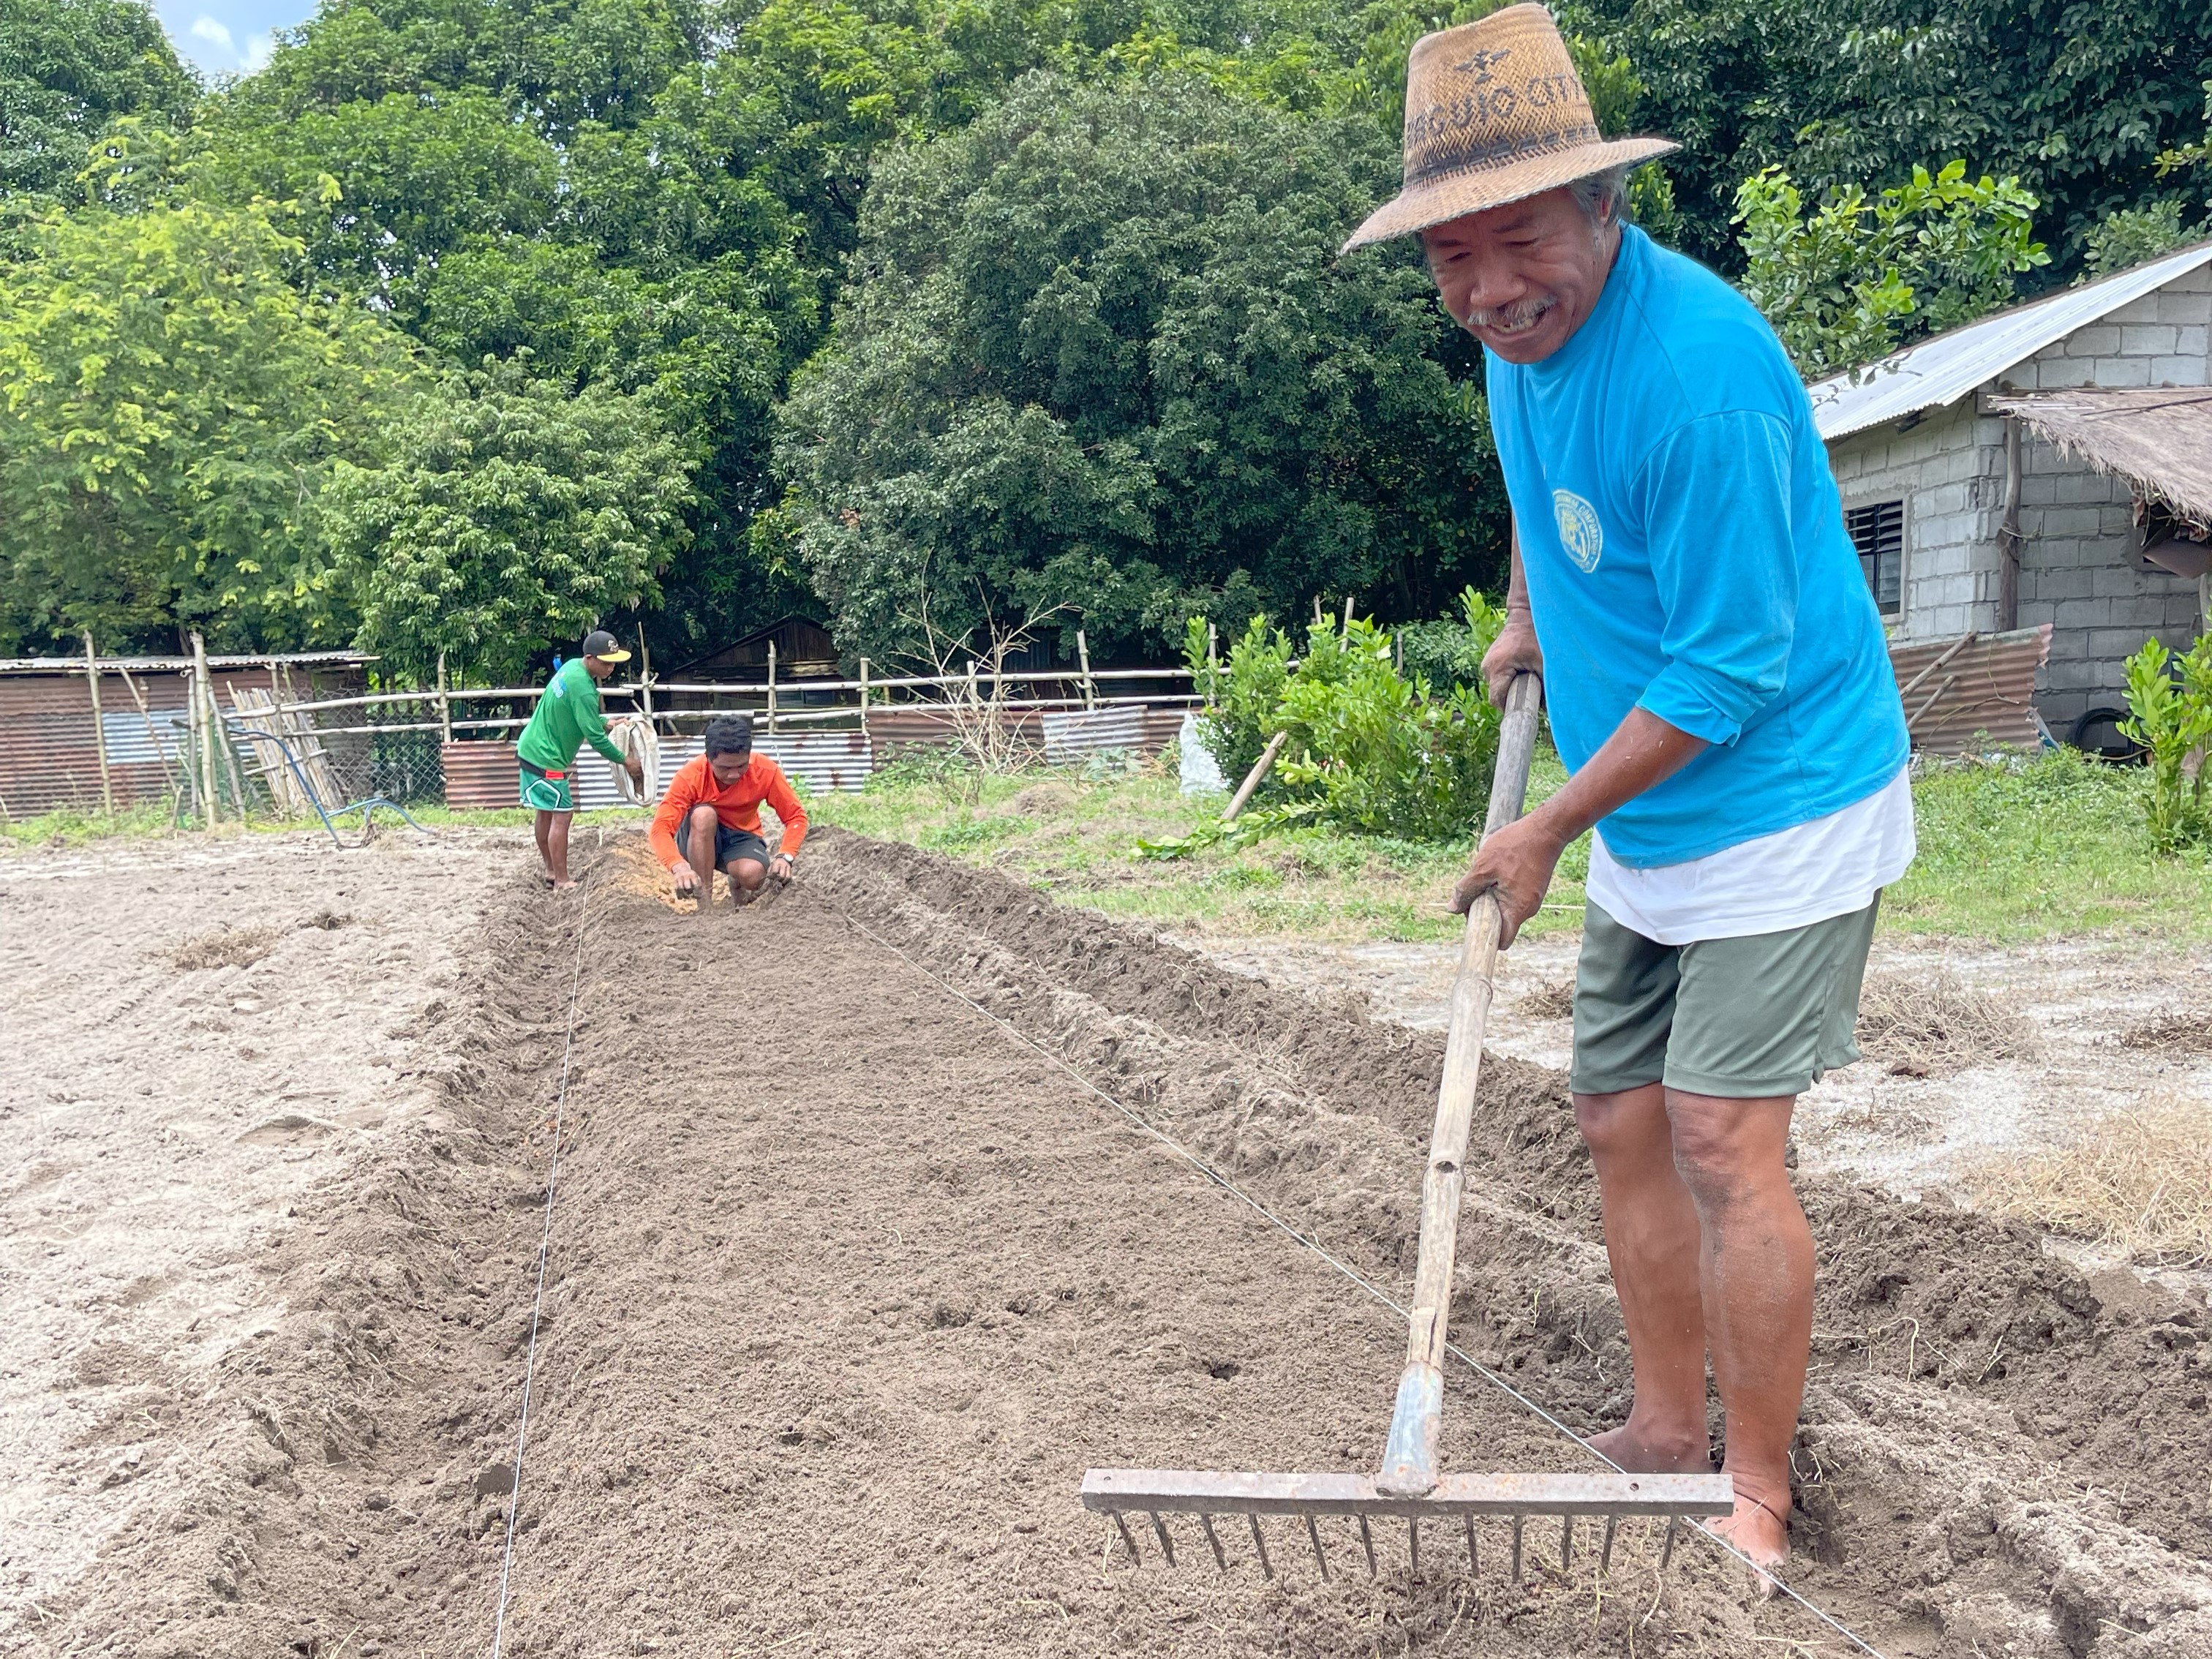 A male farmer uses a rake to prepare his raised bed